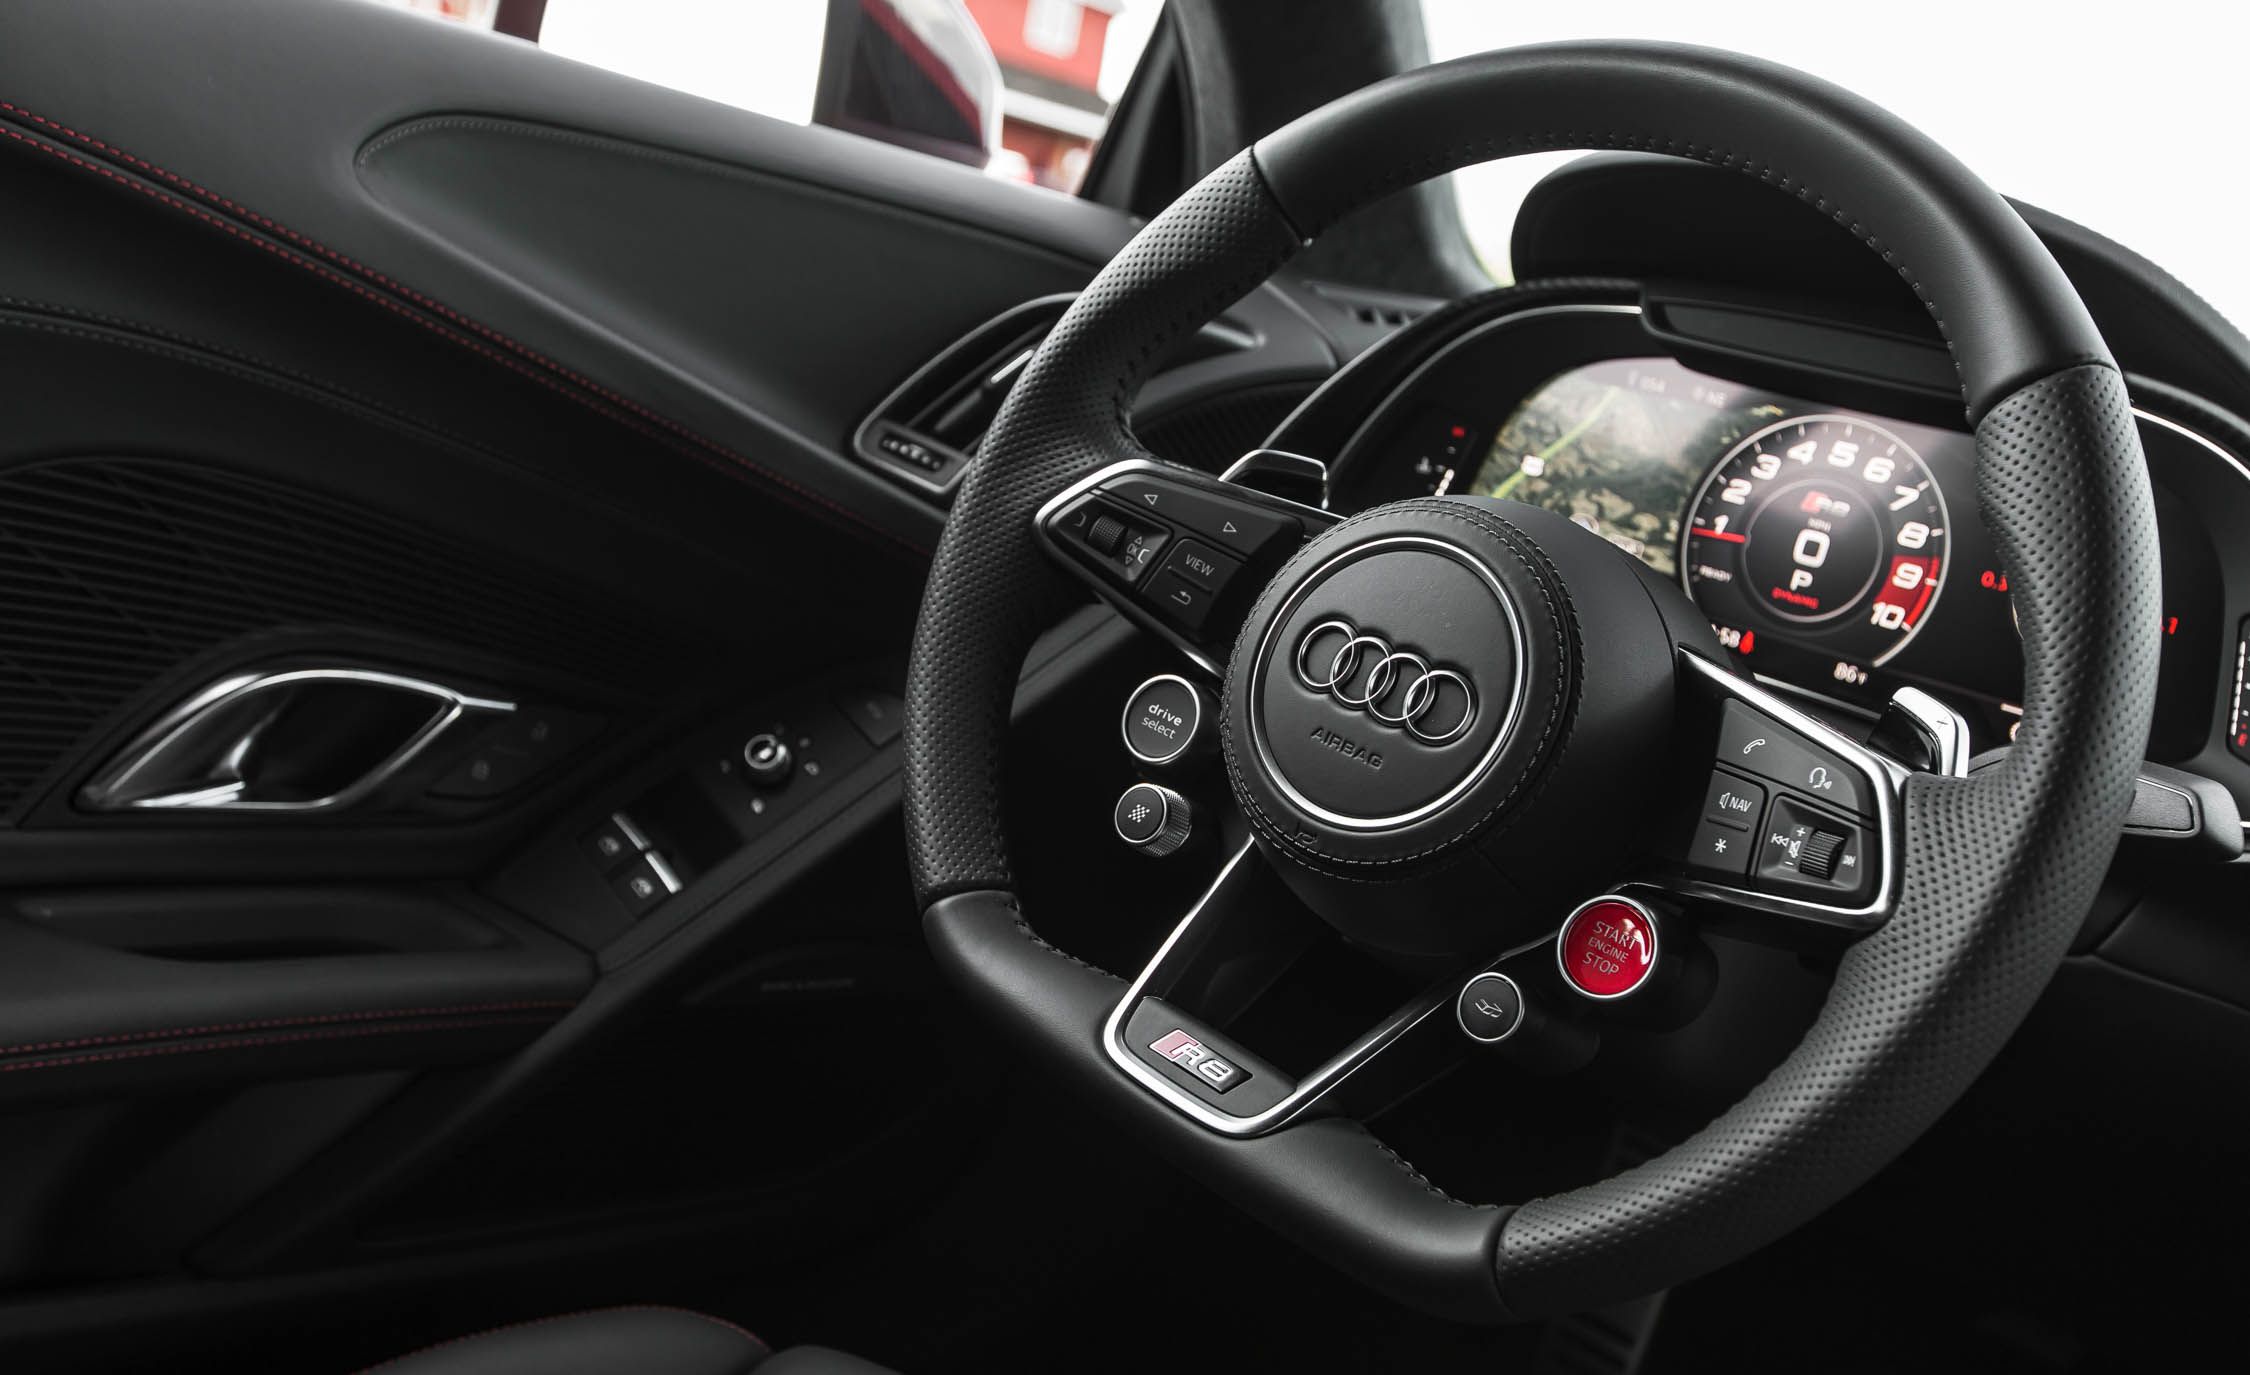 2017 Audi R8 V 10 Plus (View 12 of 19)